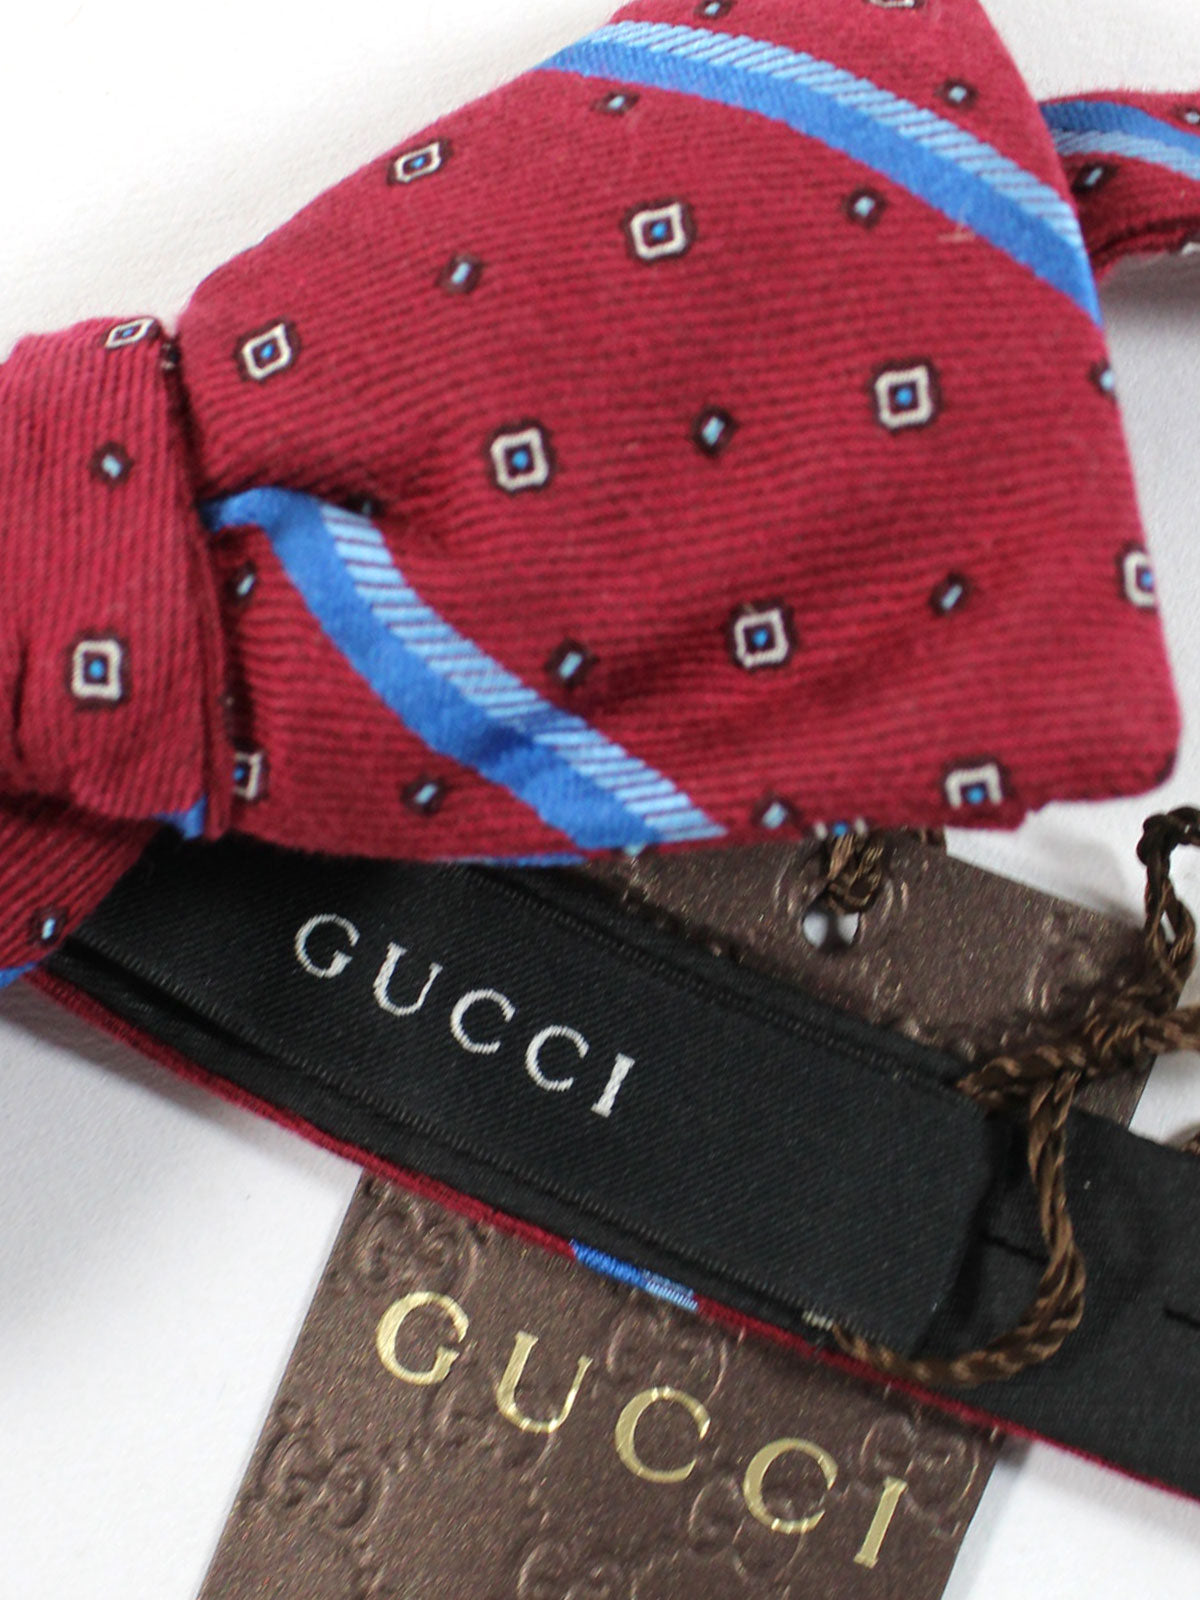 Gucci Bow Tie Burgundy Blue Stripes Design - Self Tie Bow Tie